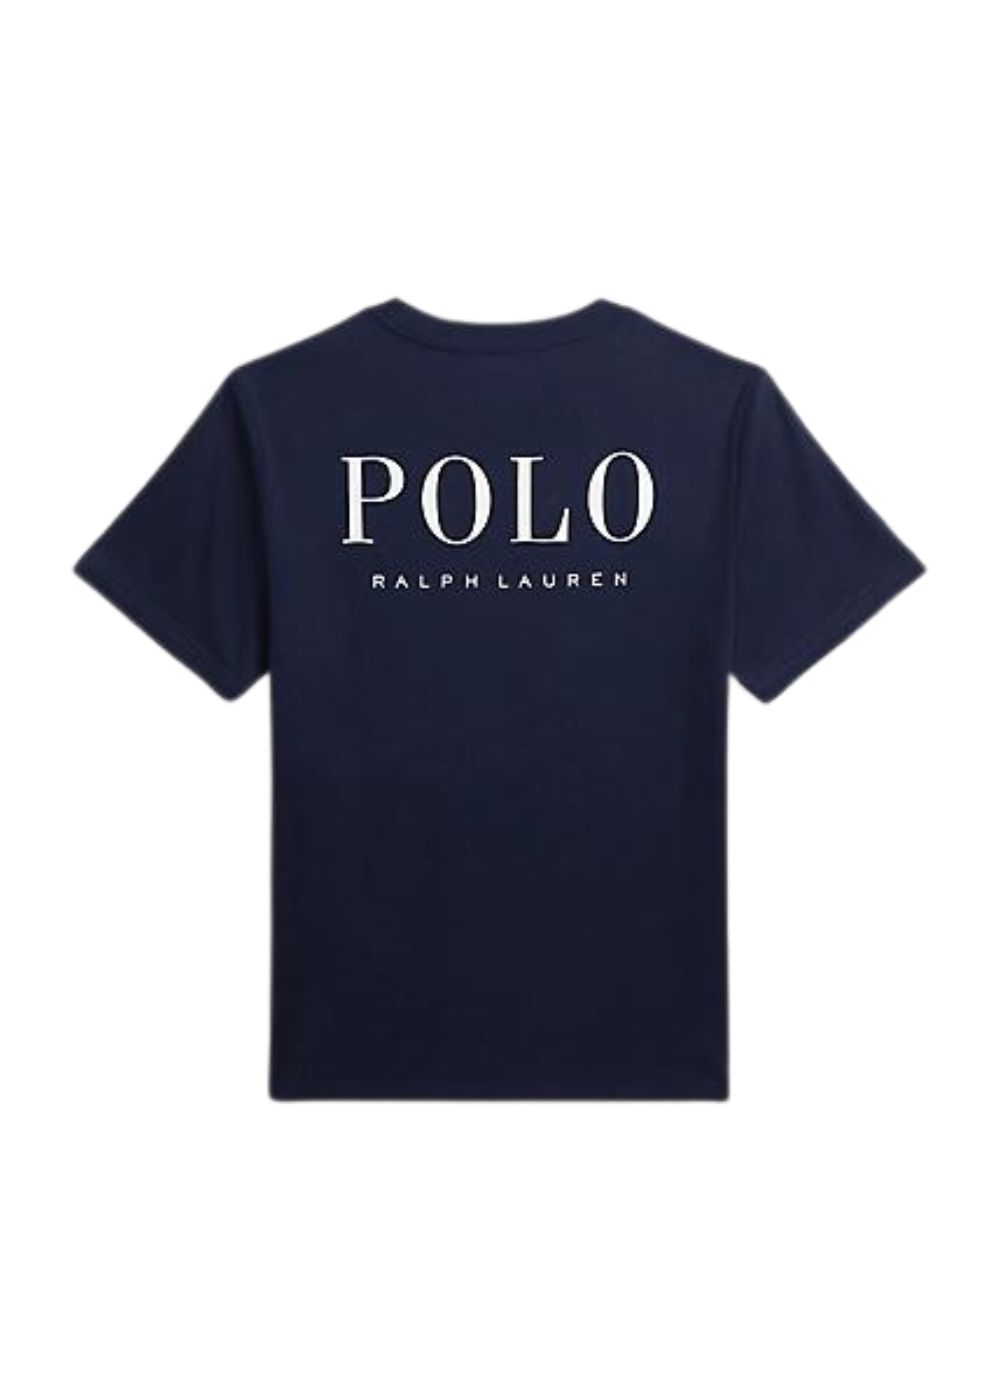 Featured image for “Polo Ralph Lauren T-shirt Con Logo sul Retro”